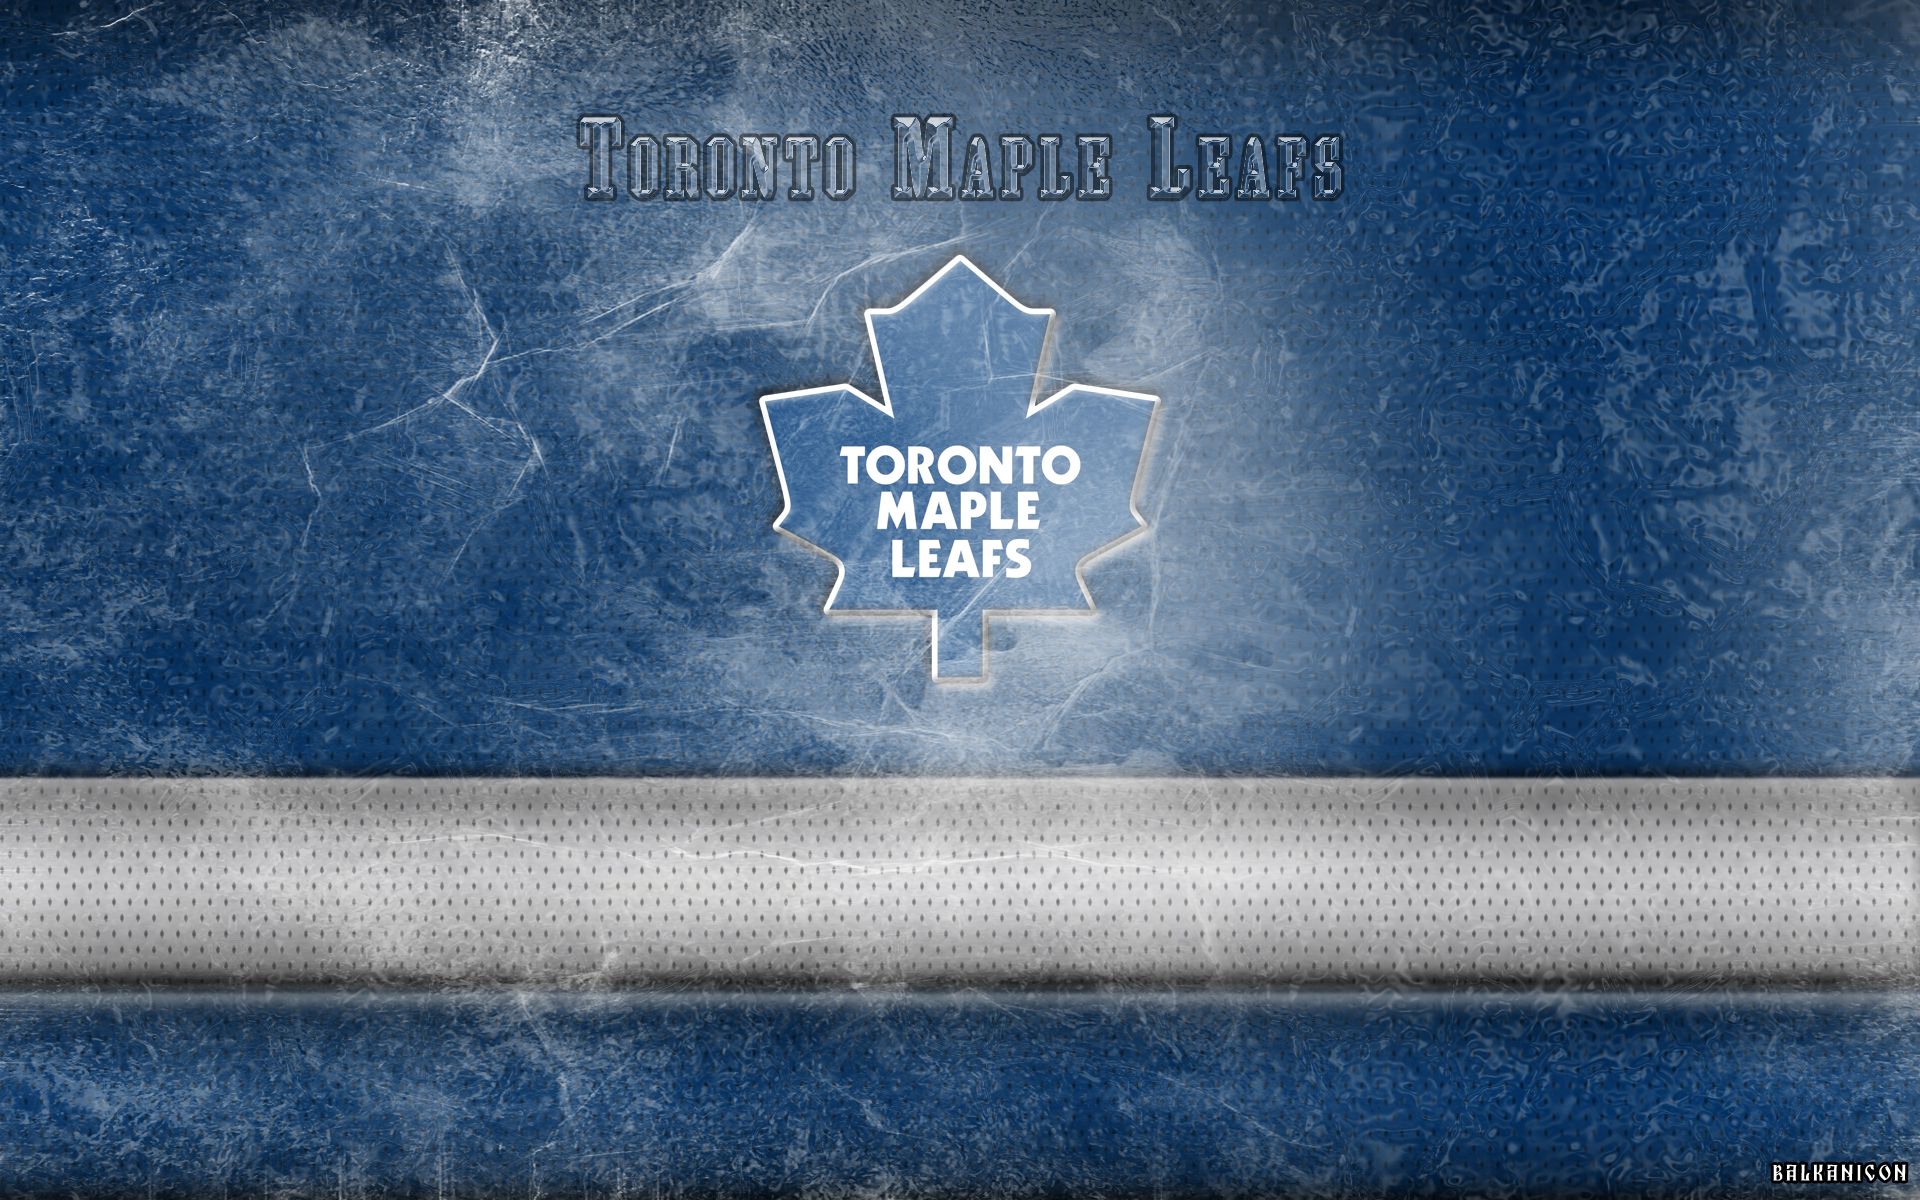 Toronto Maple Leafs wallpaper by Balkanicon on DeviantArt